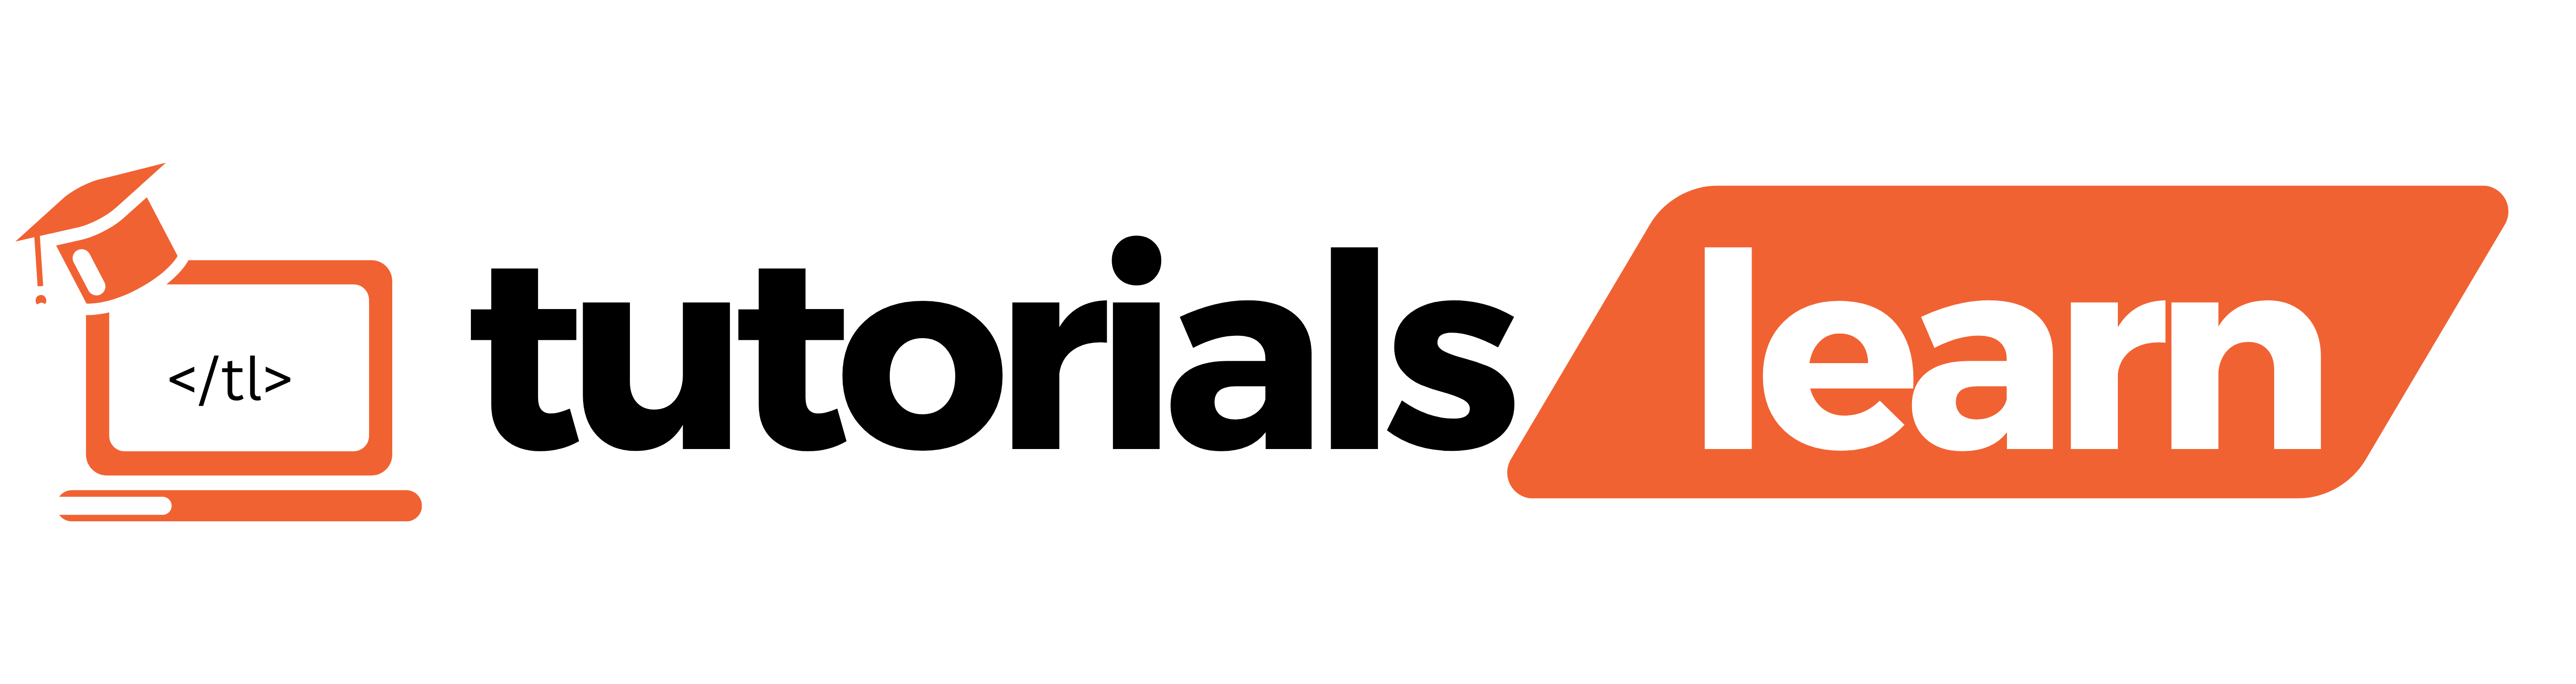 Tutorials Learn Logo final